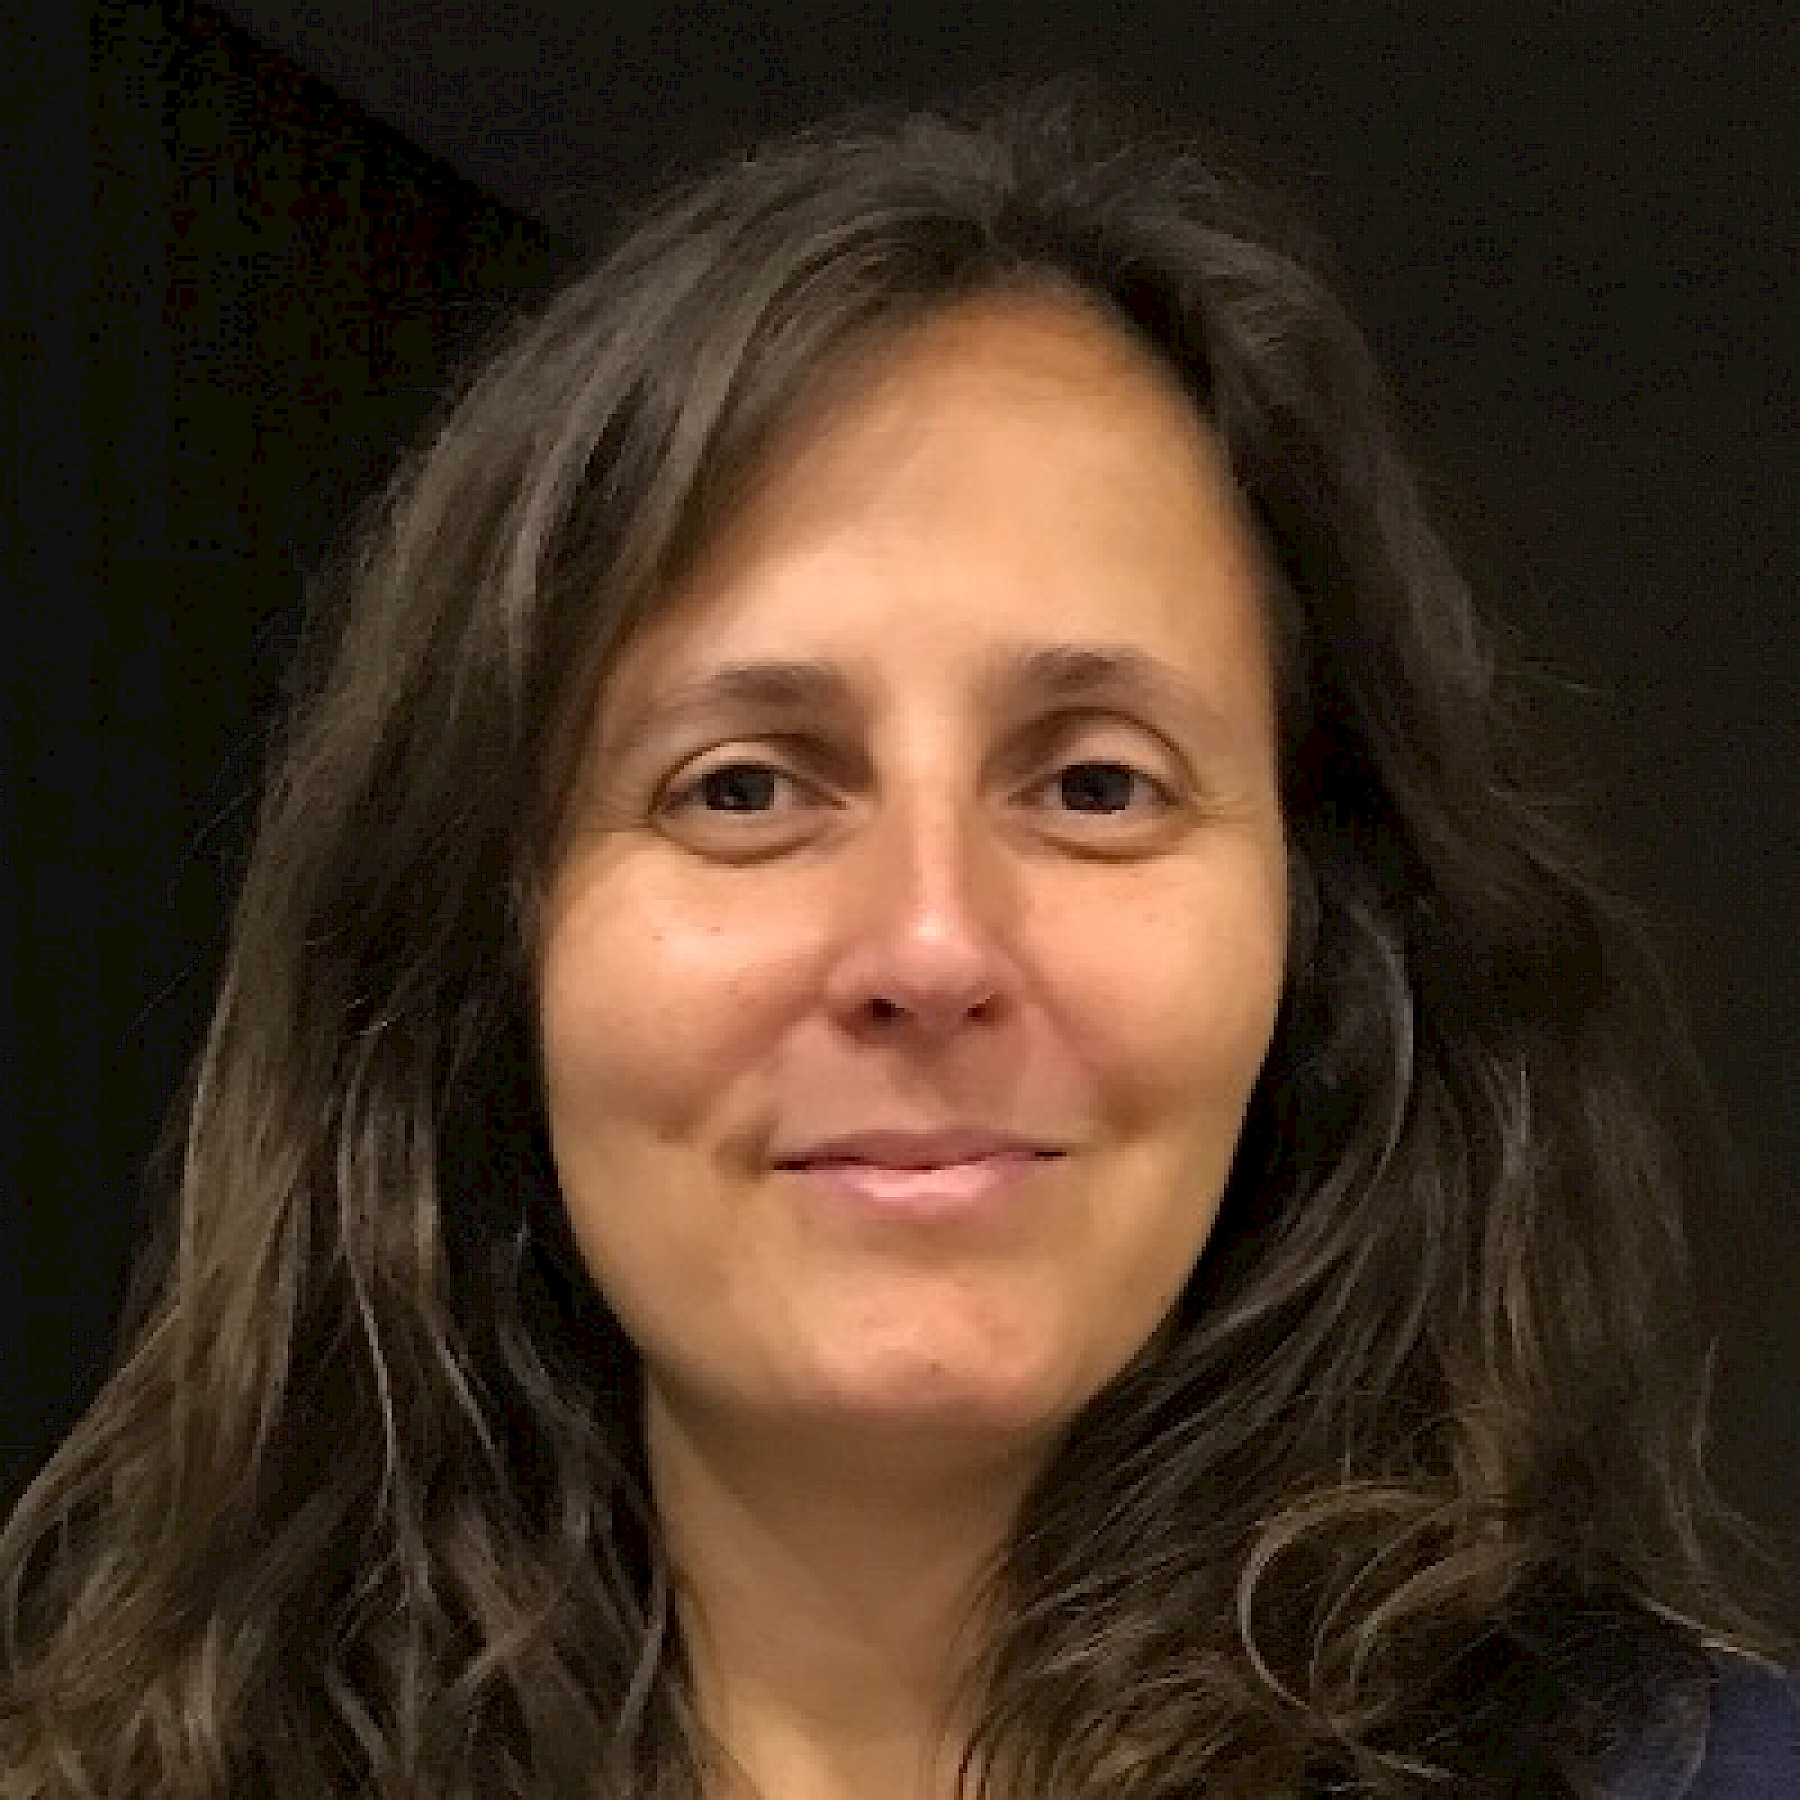 Catarina Silva, professora do Departamento de Engenharia Informática da FCTUC e investigadora no Centro de Informática e Sistemas da Universidade de Coimbra .